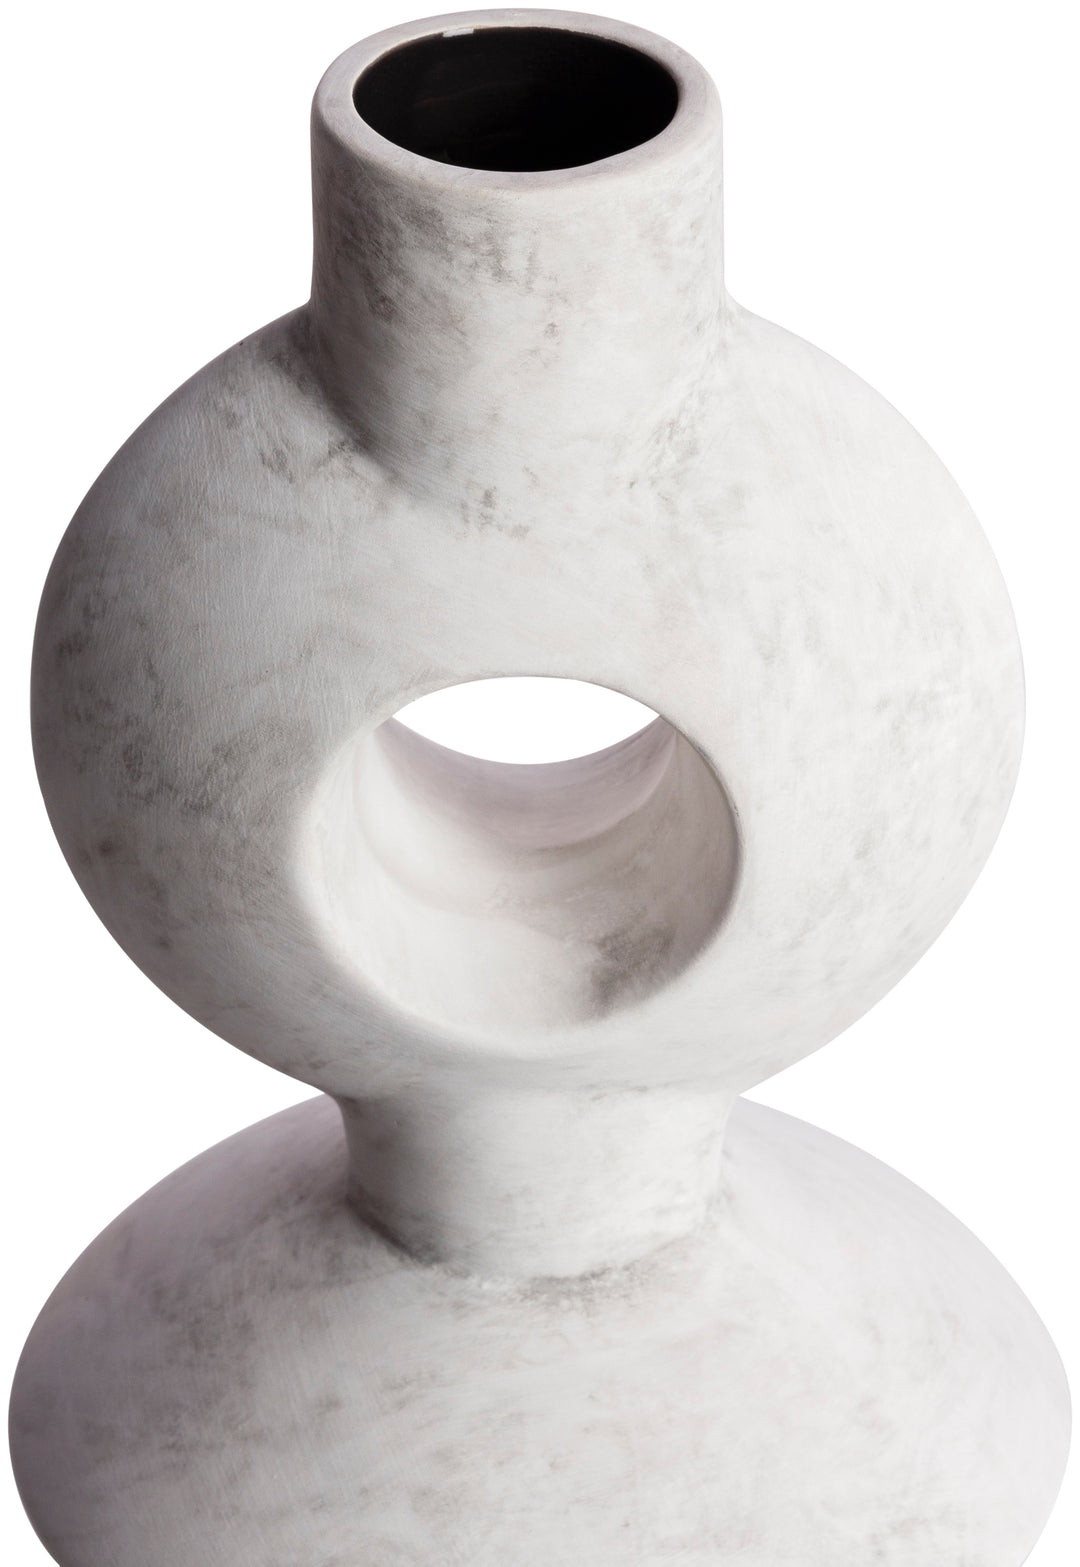 Reverie Pebble Decorative Ceramic Accent - White